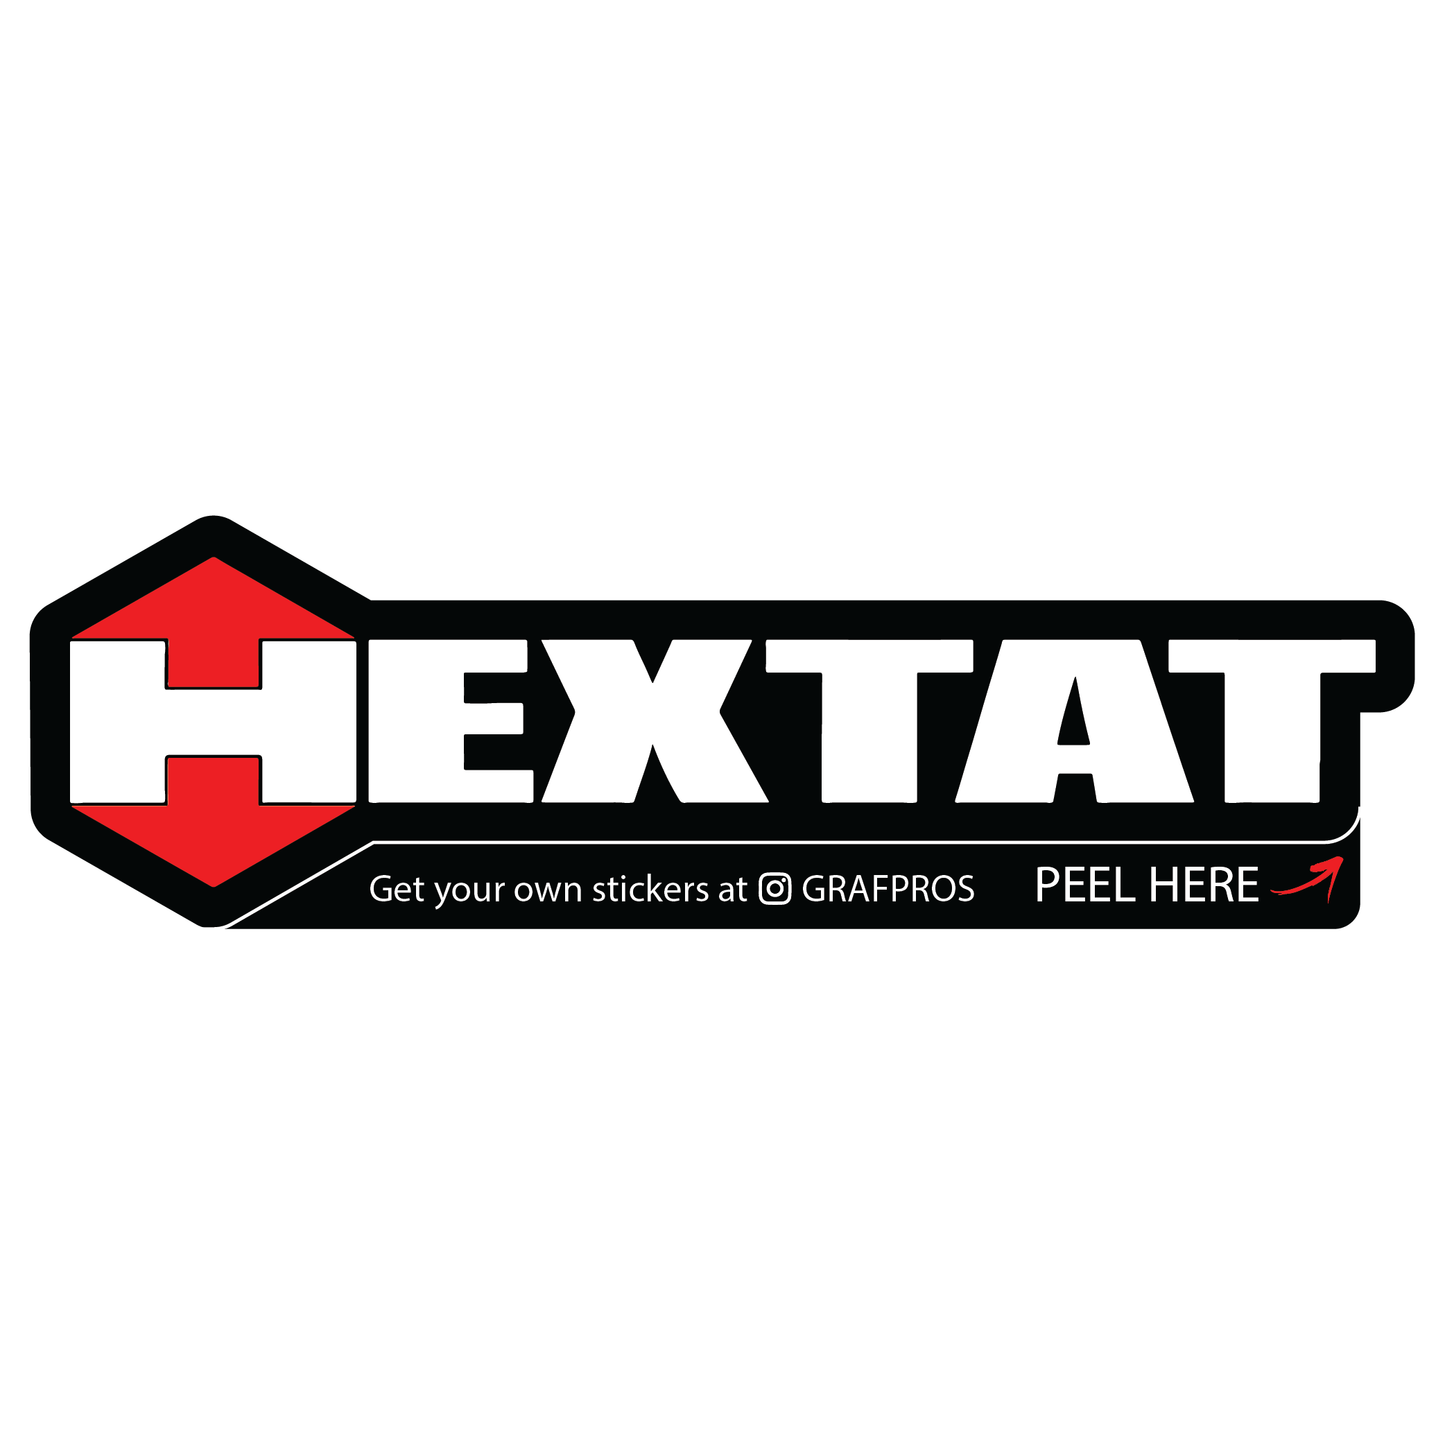 HEXTAT Logo Sticker 5x2"